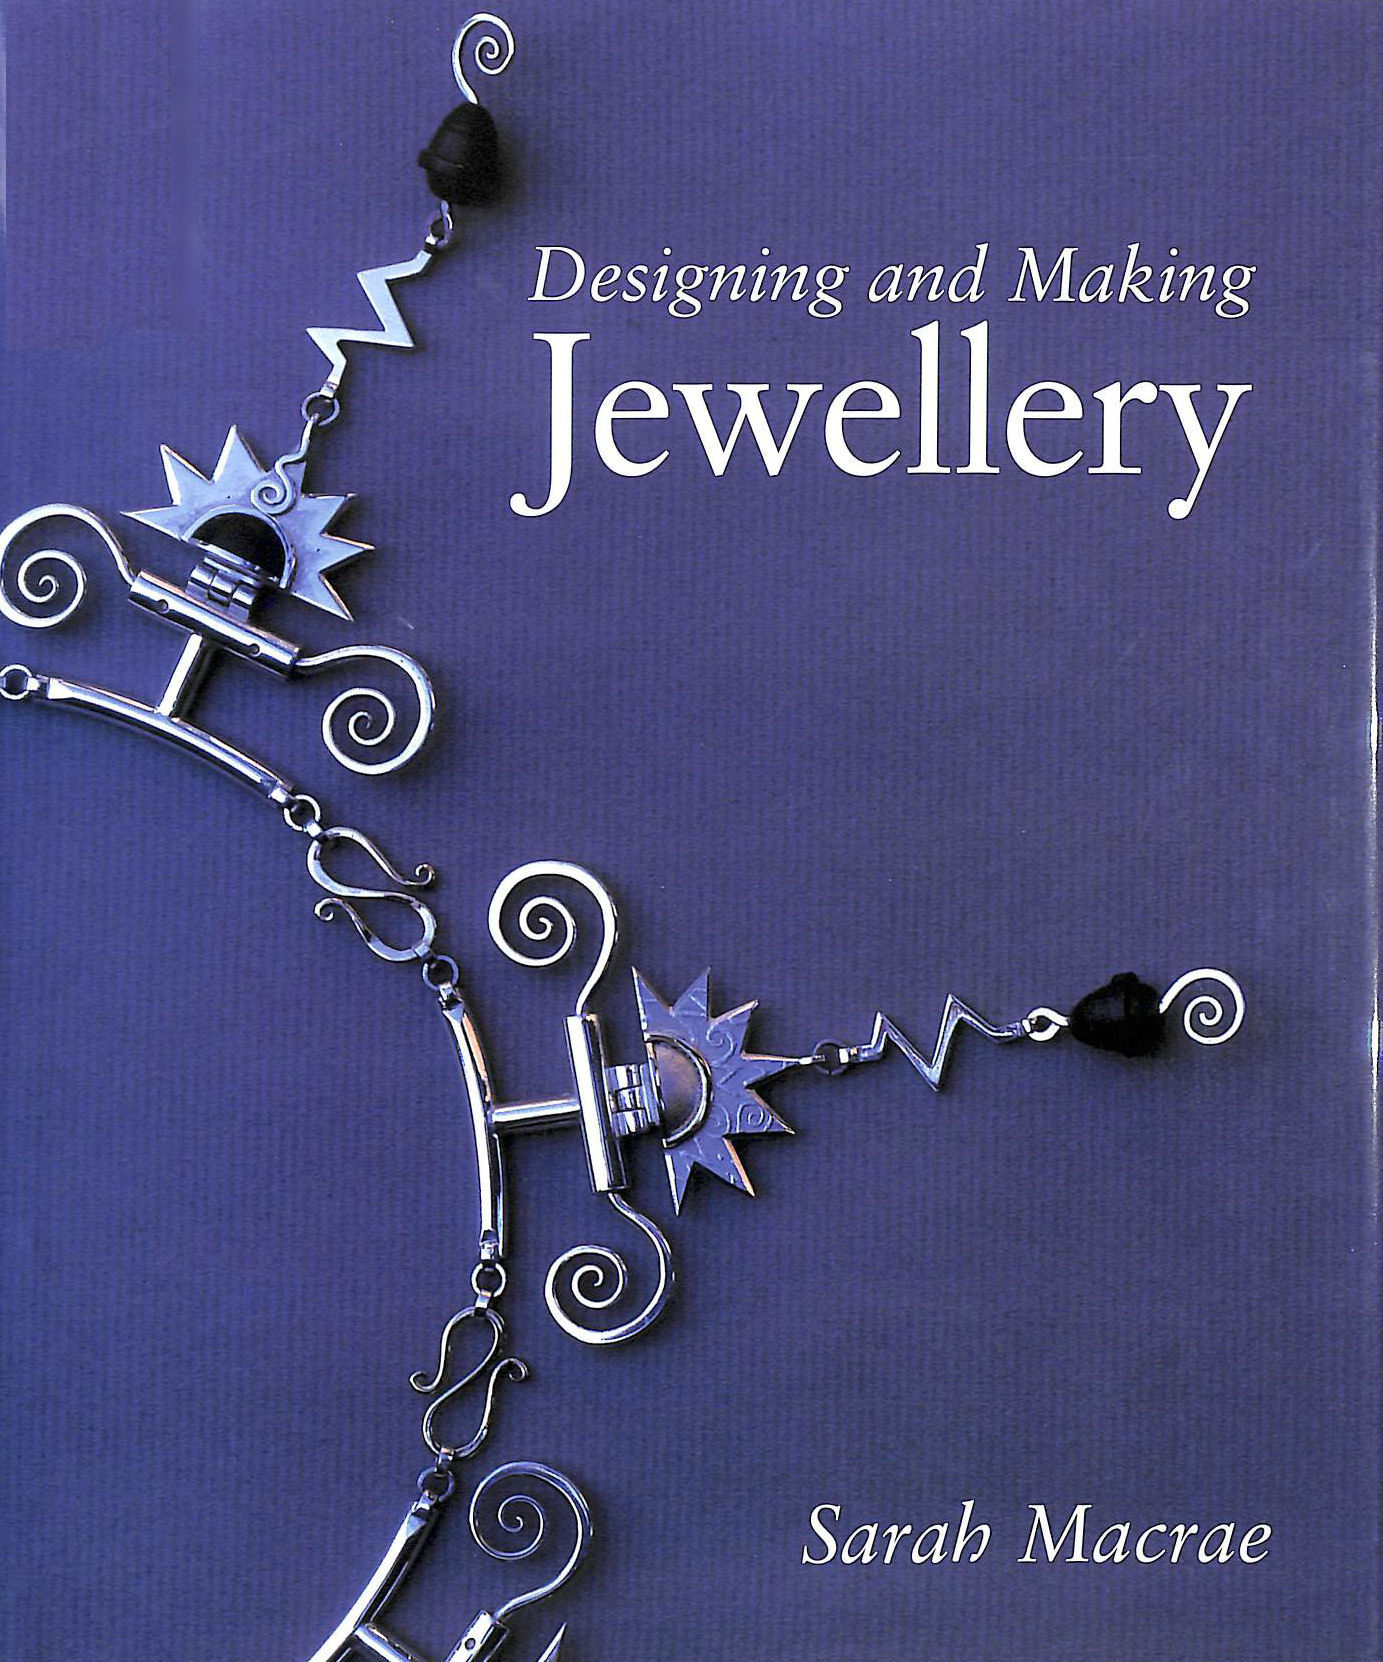 SARAH MACRAE - Designing and Making Jewellery